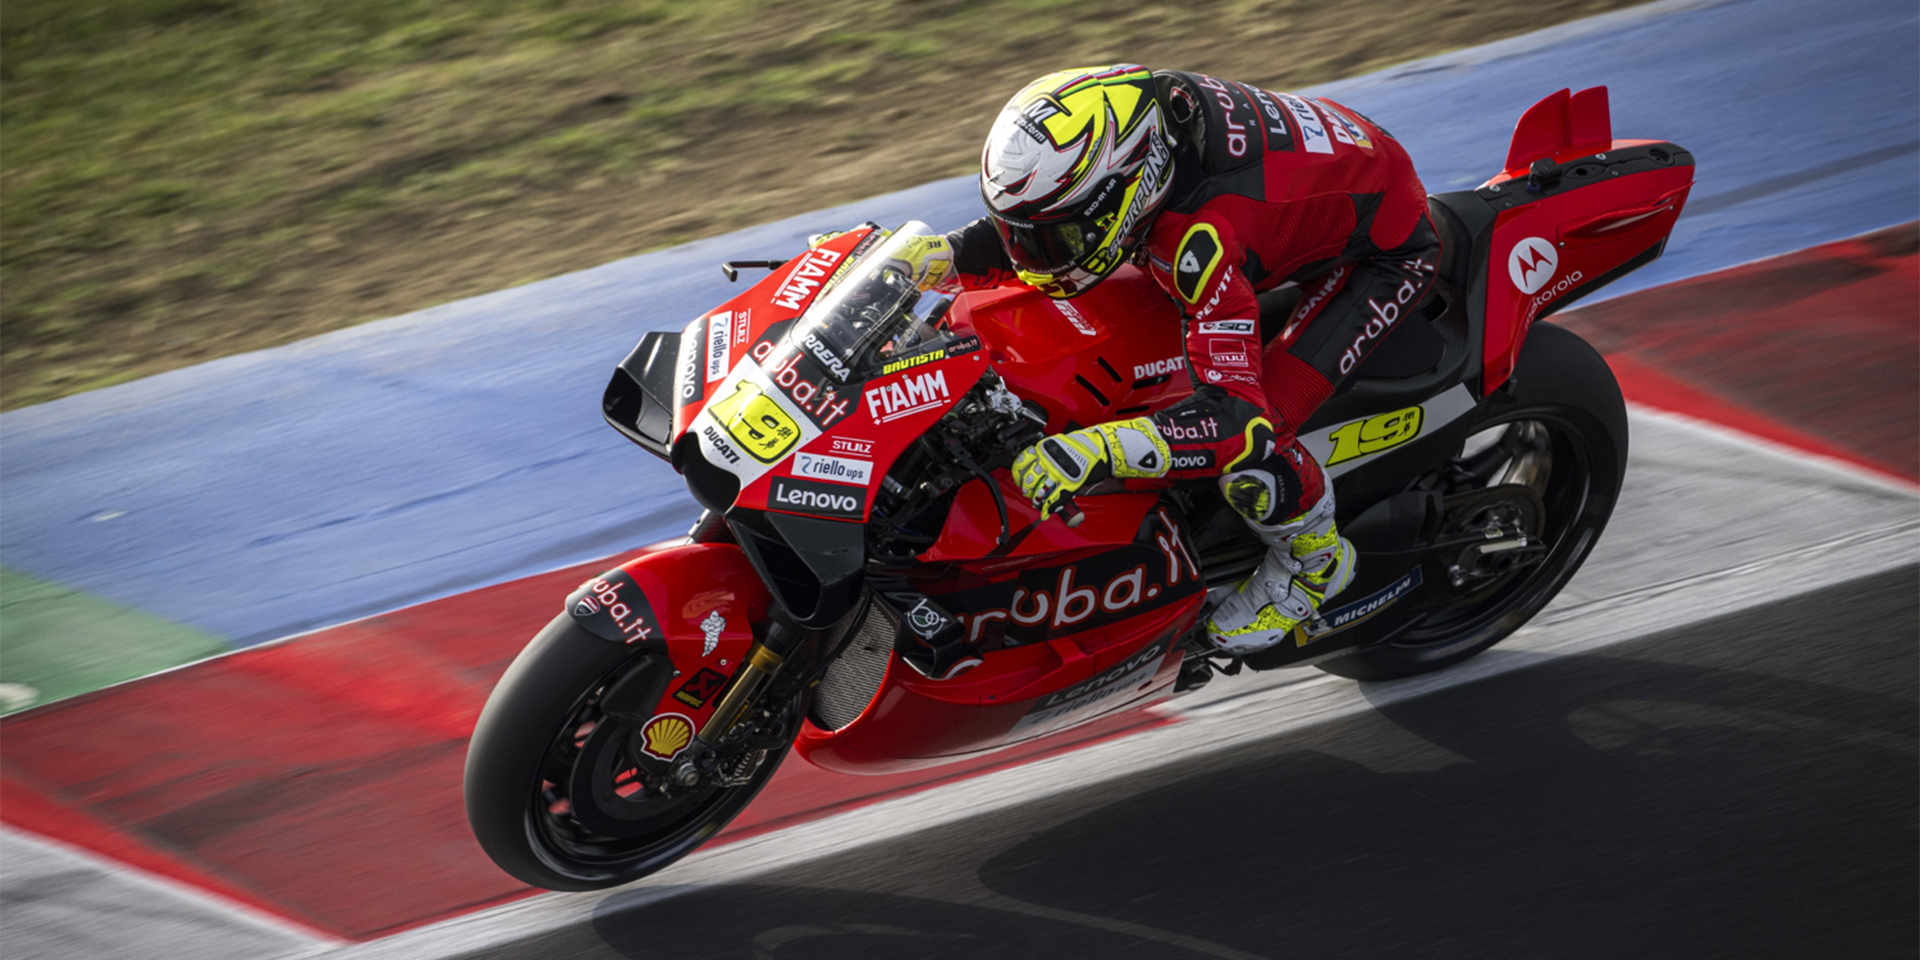 Alvaro Bautistas test with the Ducati Desmosedici GP concluded at Misano.